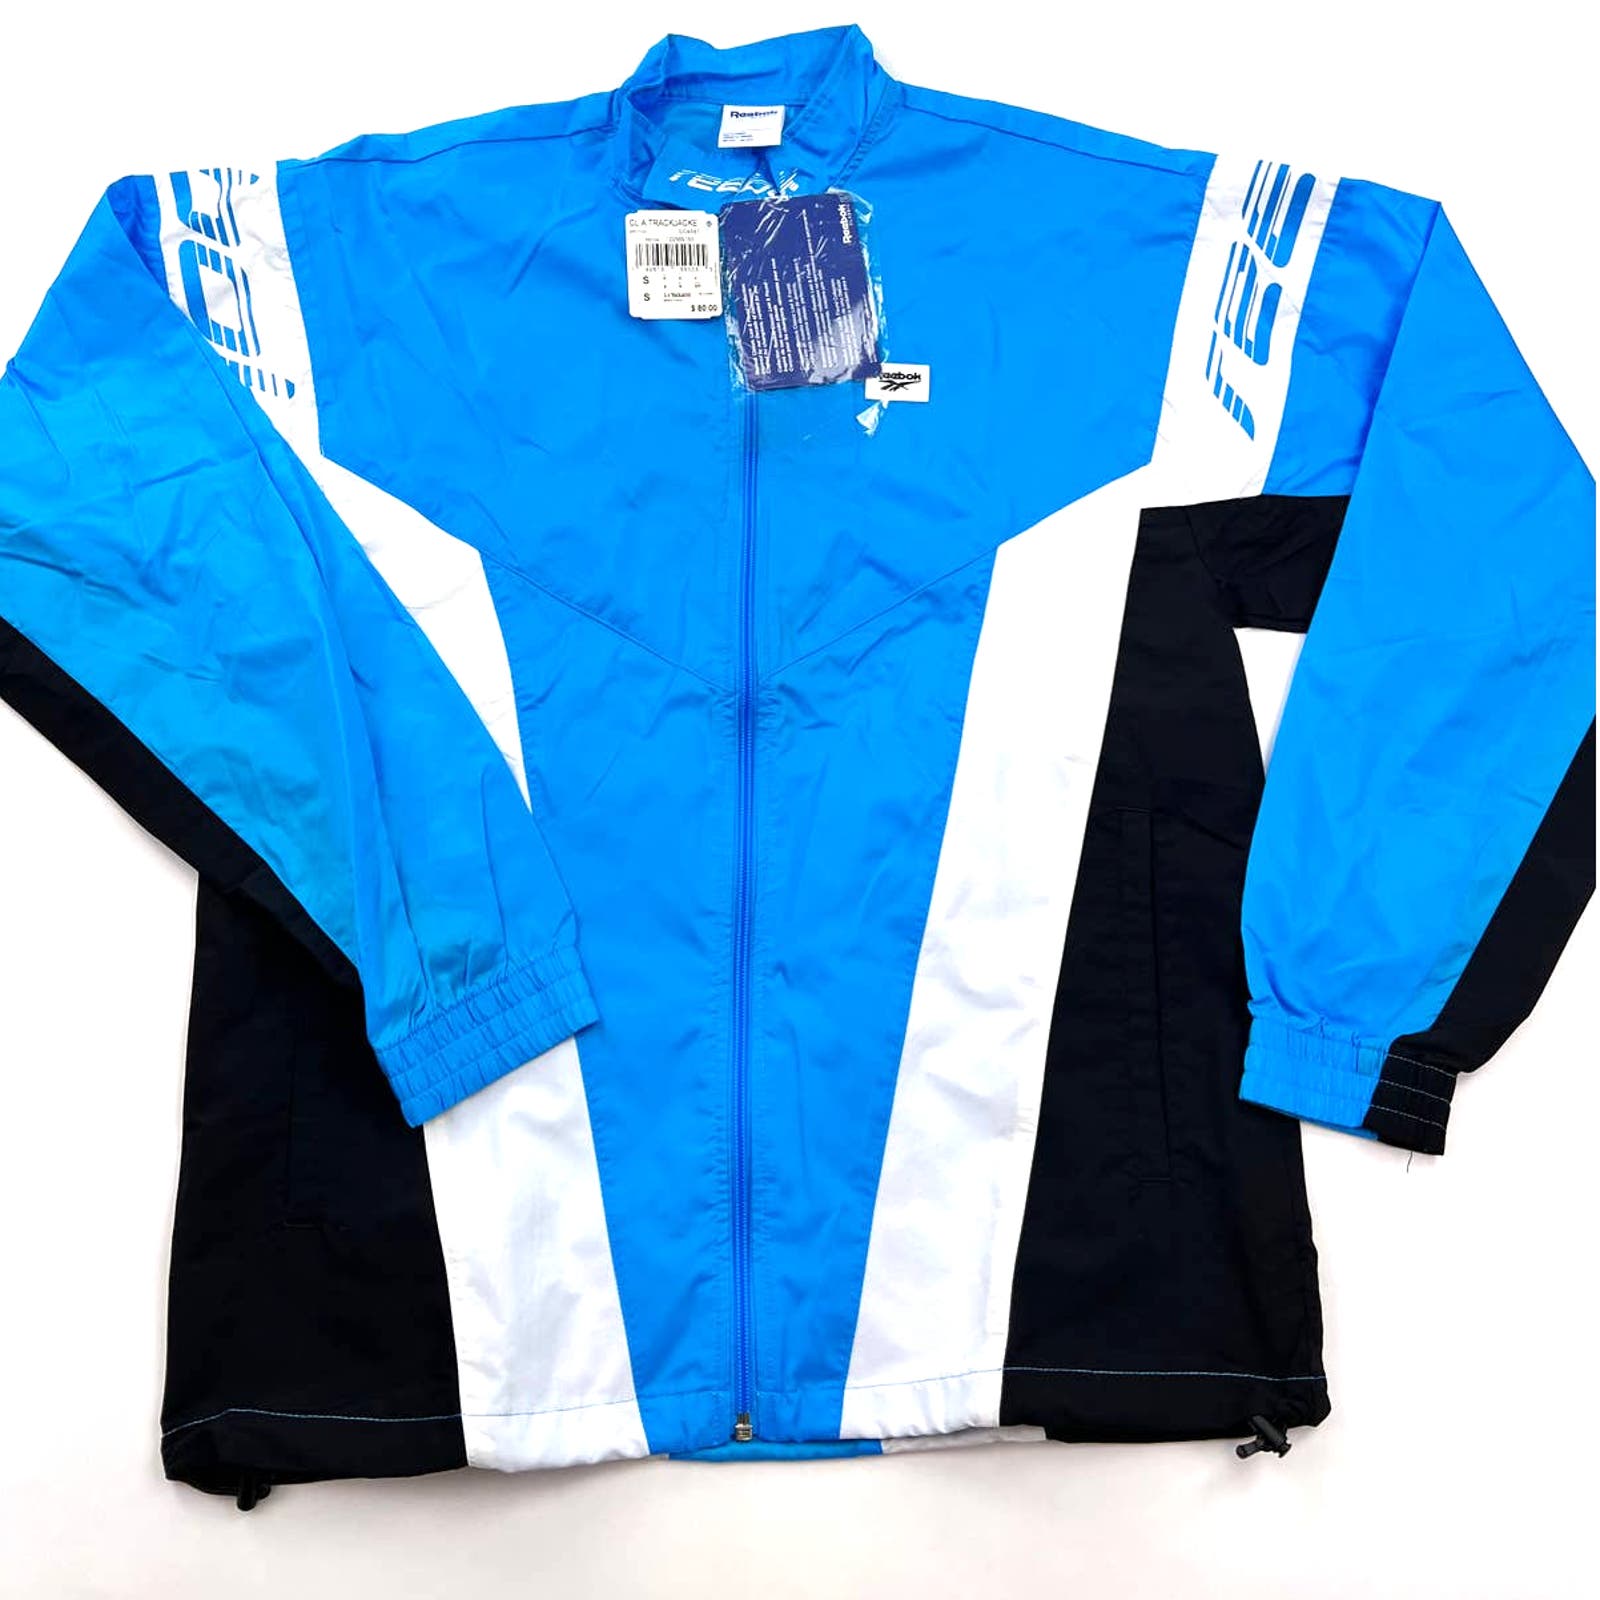 Reebok Classic Men Blue Windbreaker US M Track Jacket Zip Up